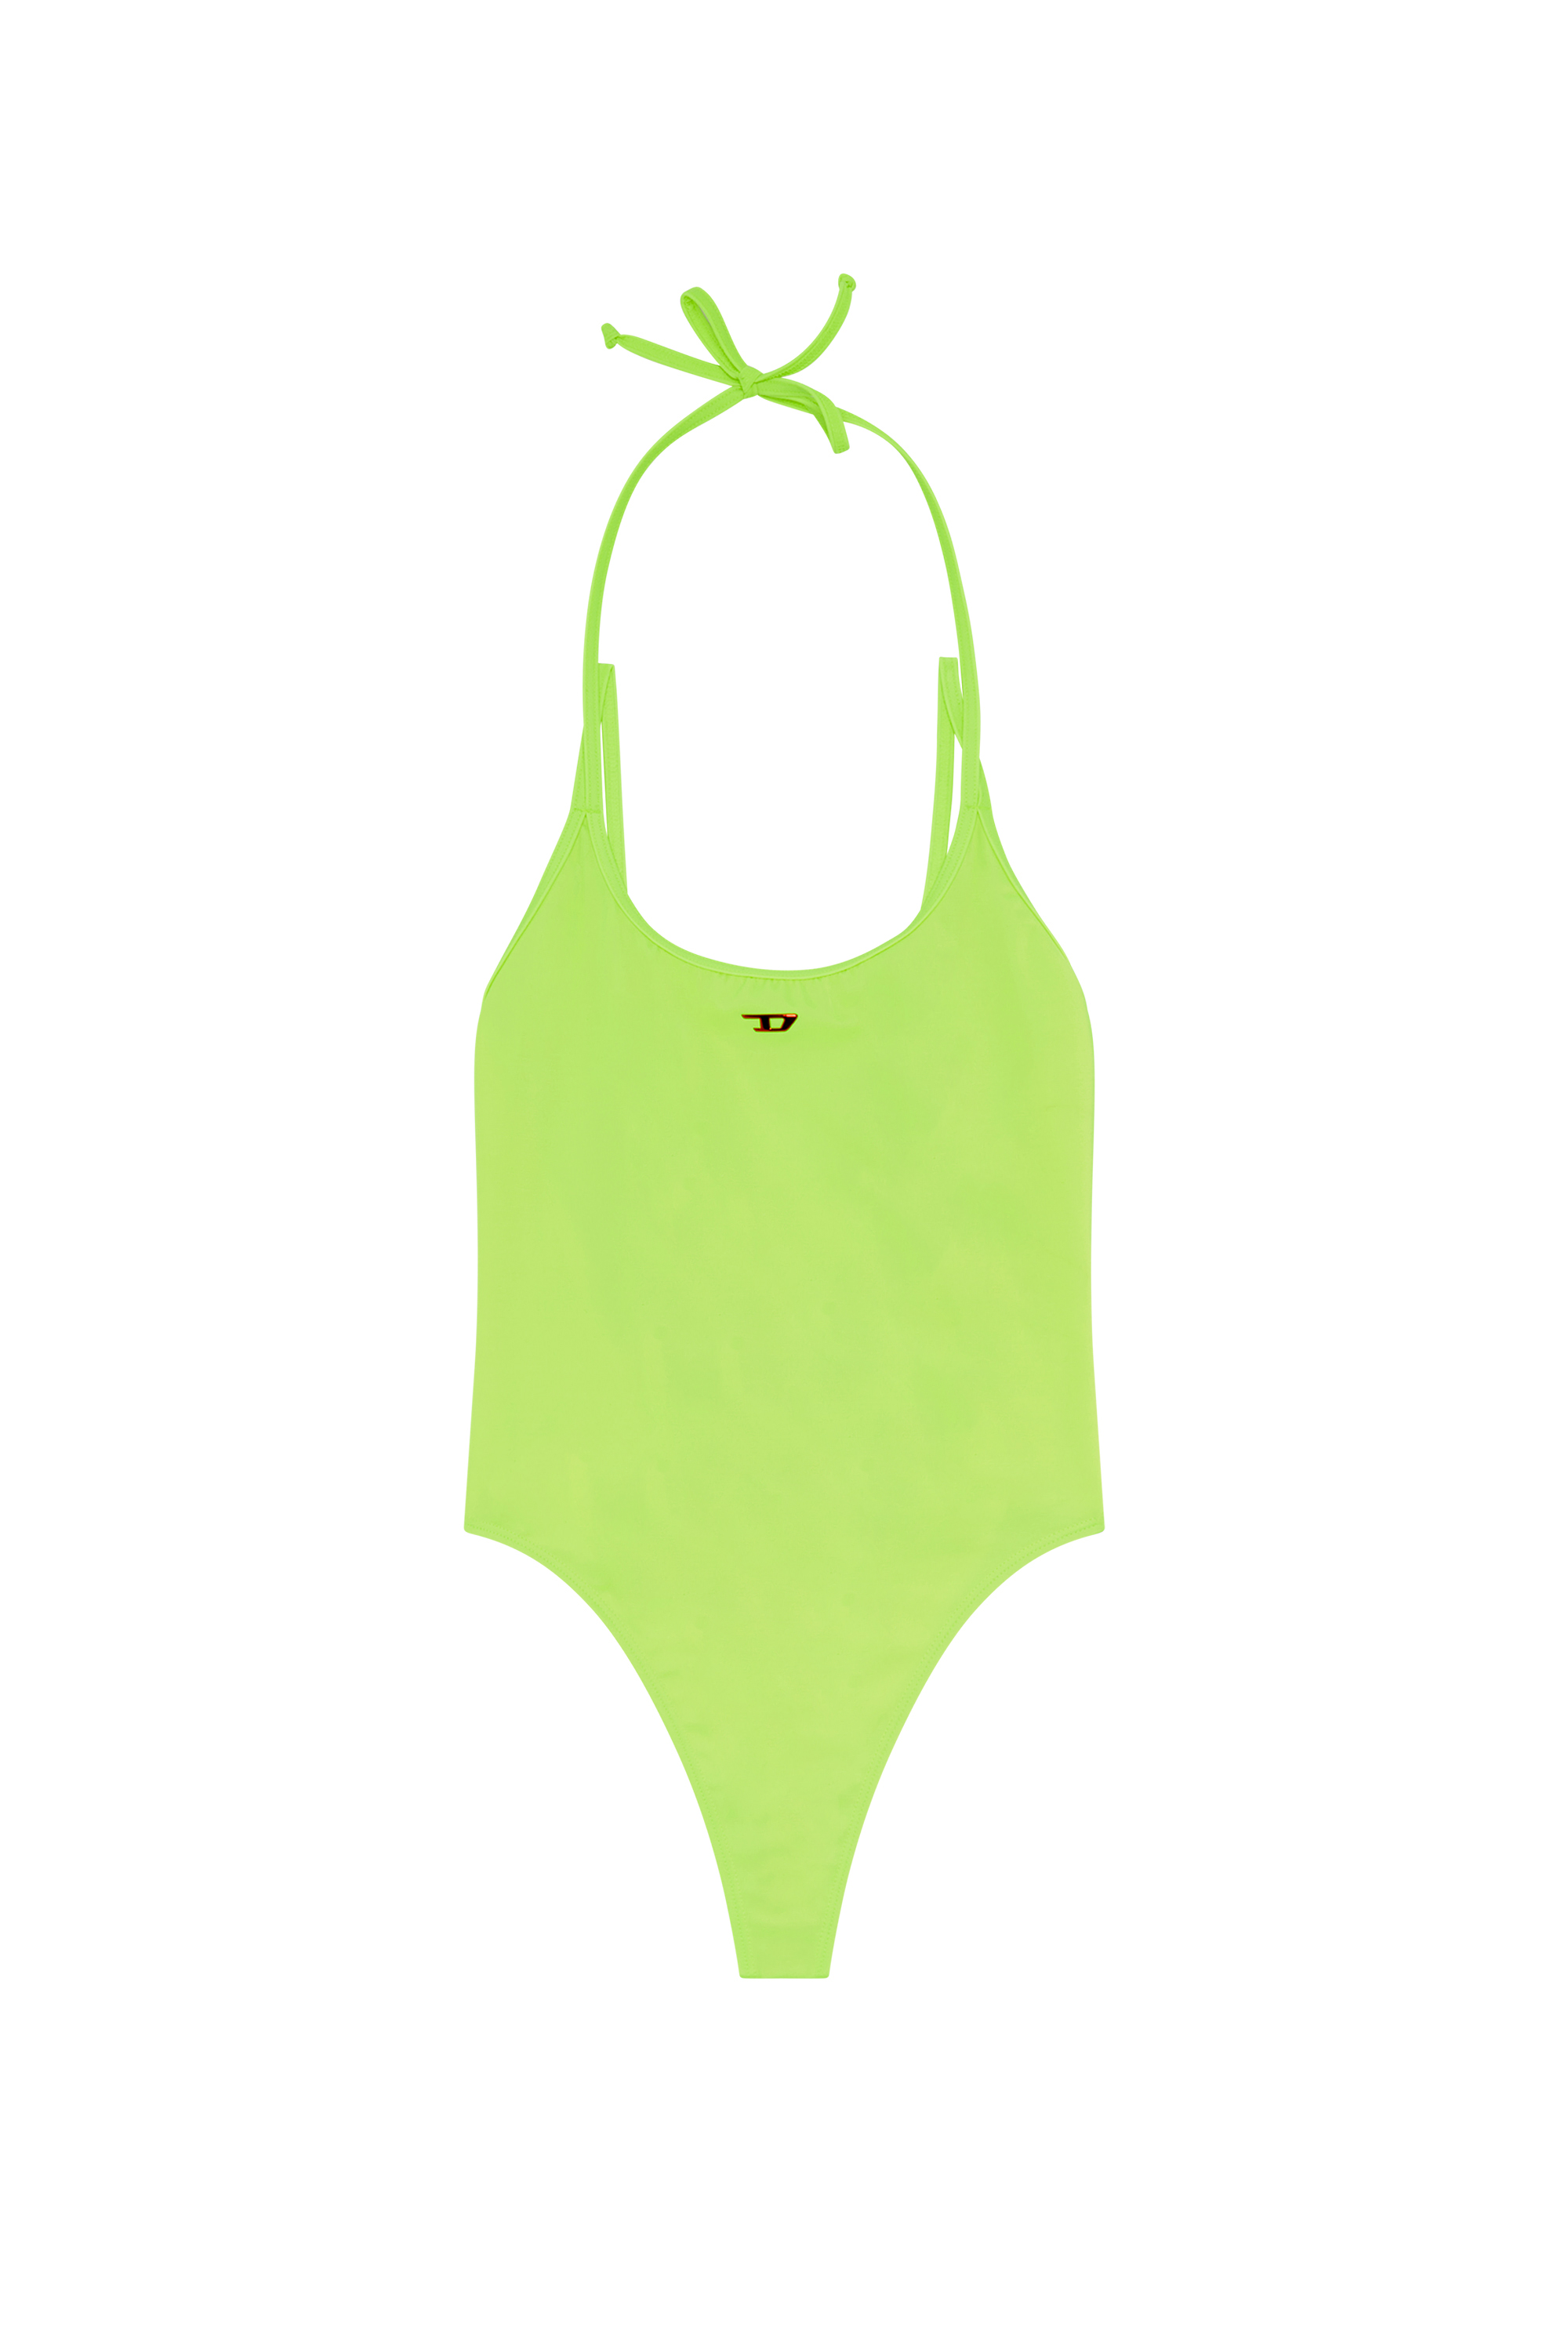 Women's Beachwear: One-piece swimsuits, Bikinis, Briefs